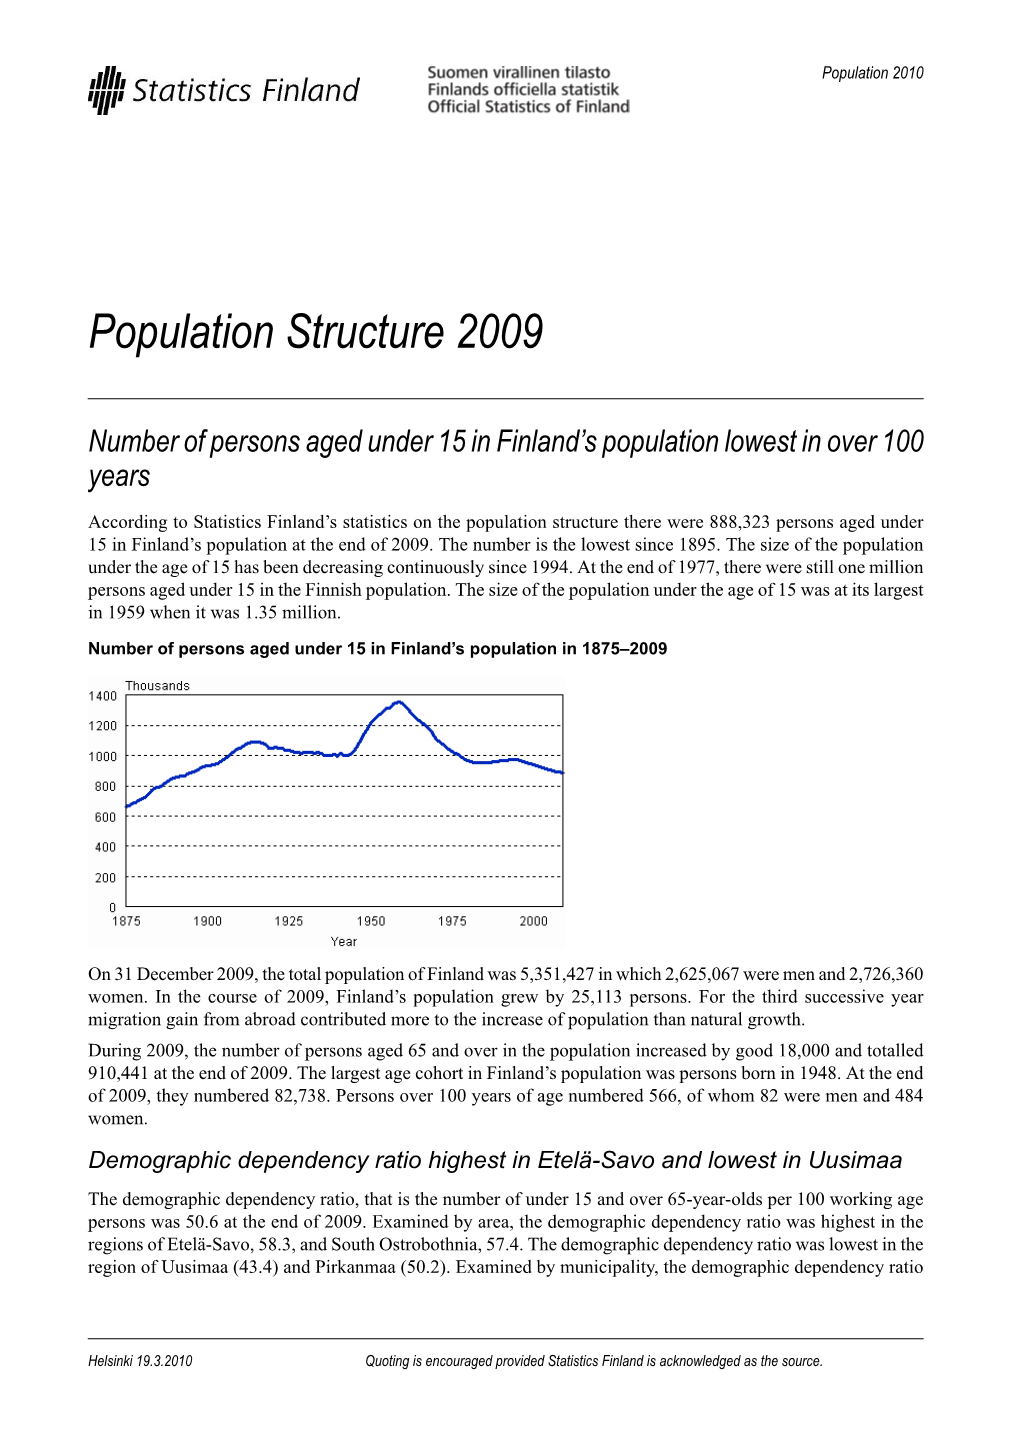 Population Structure 2009